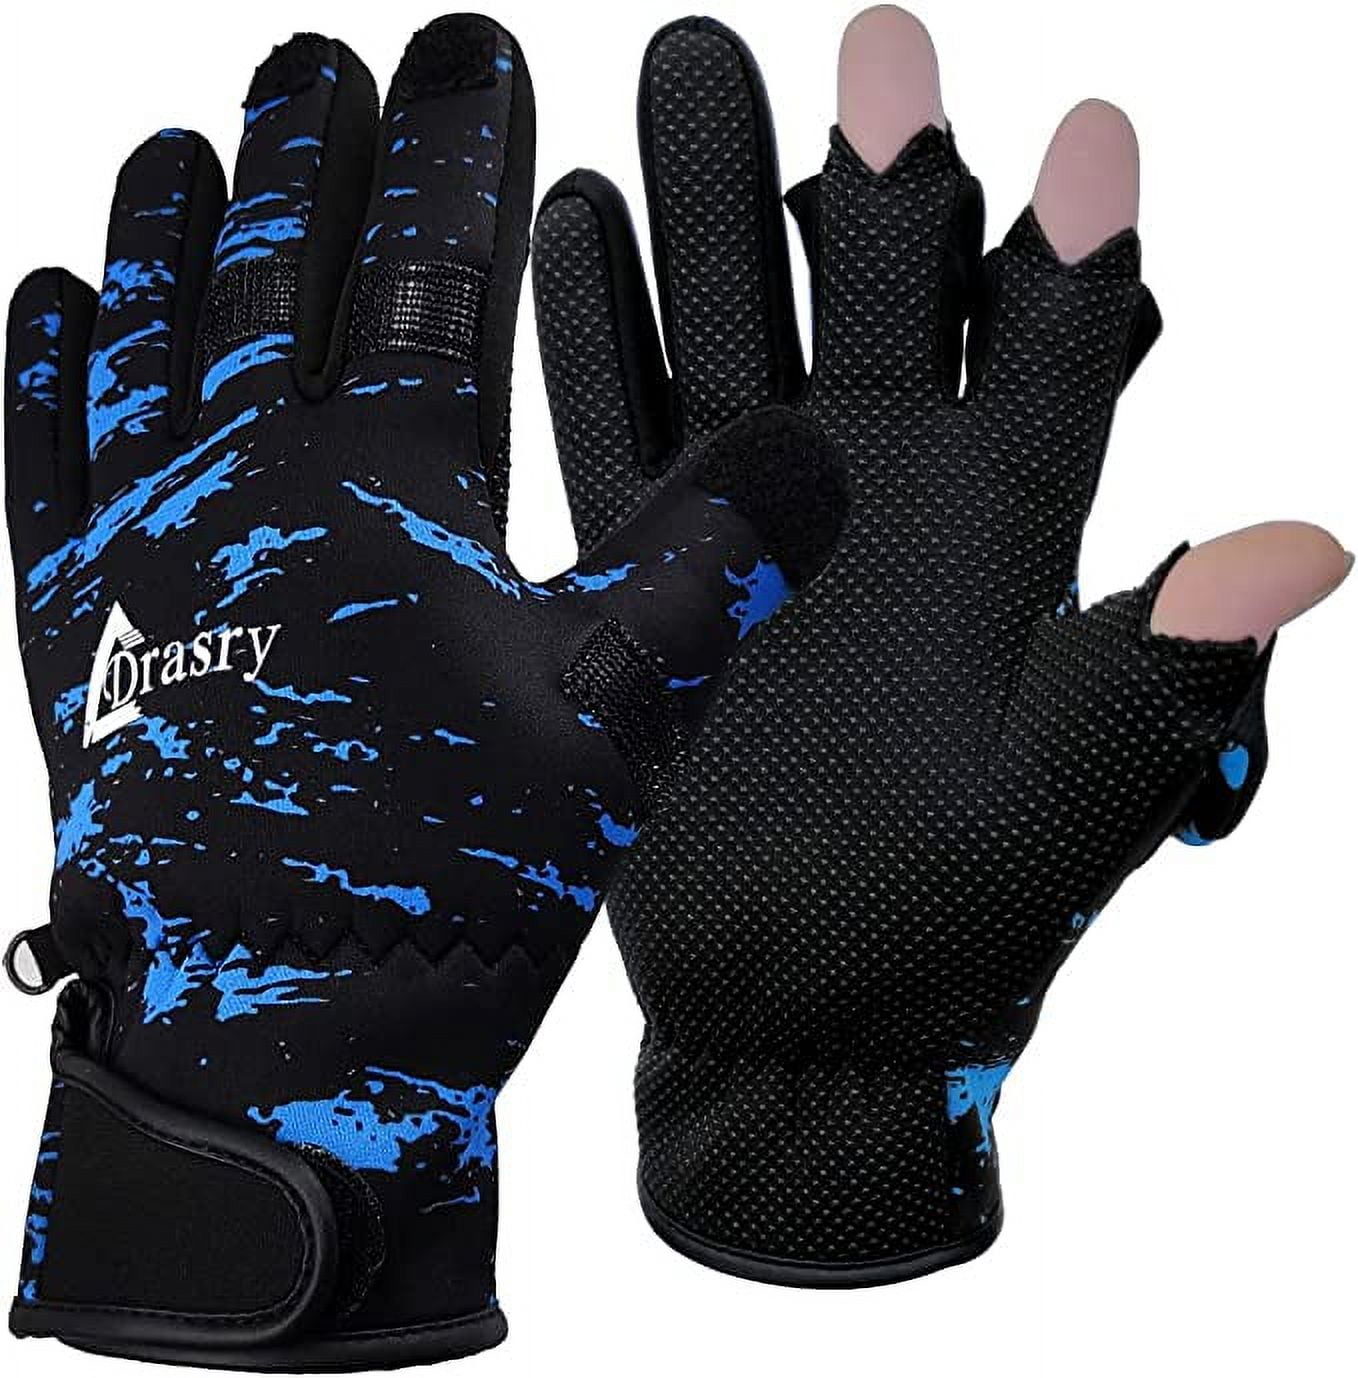 Drasry Neoprene Gloves Touchscreen 3 Cut Fingers Warm Cold Man Woman Winter  Fishing Glove Black XL 